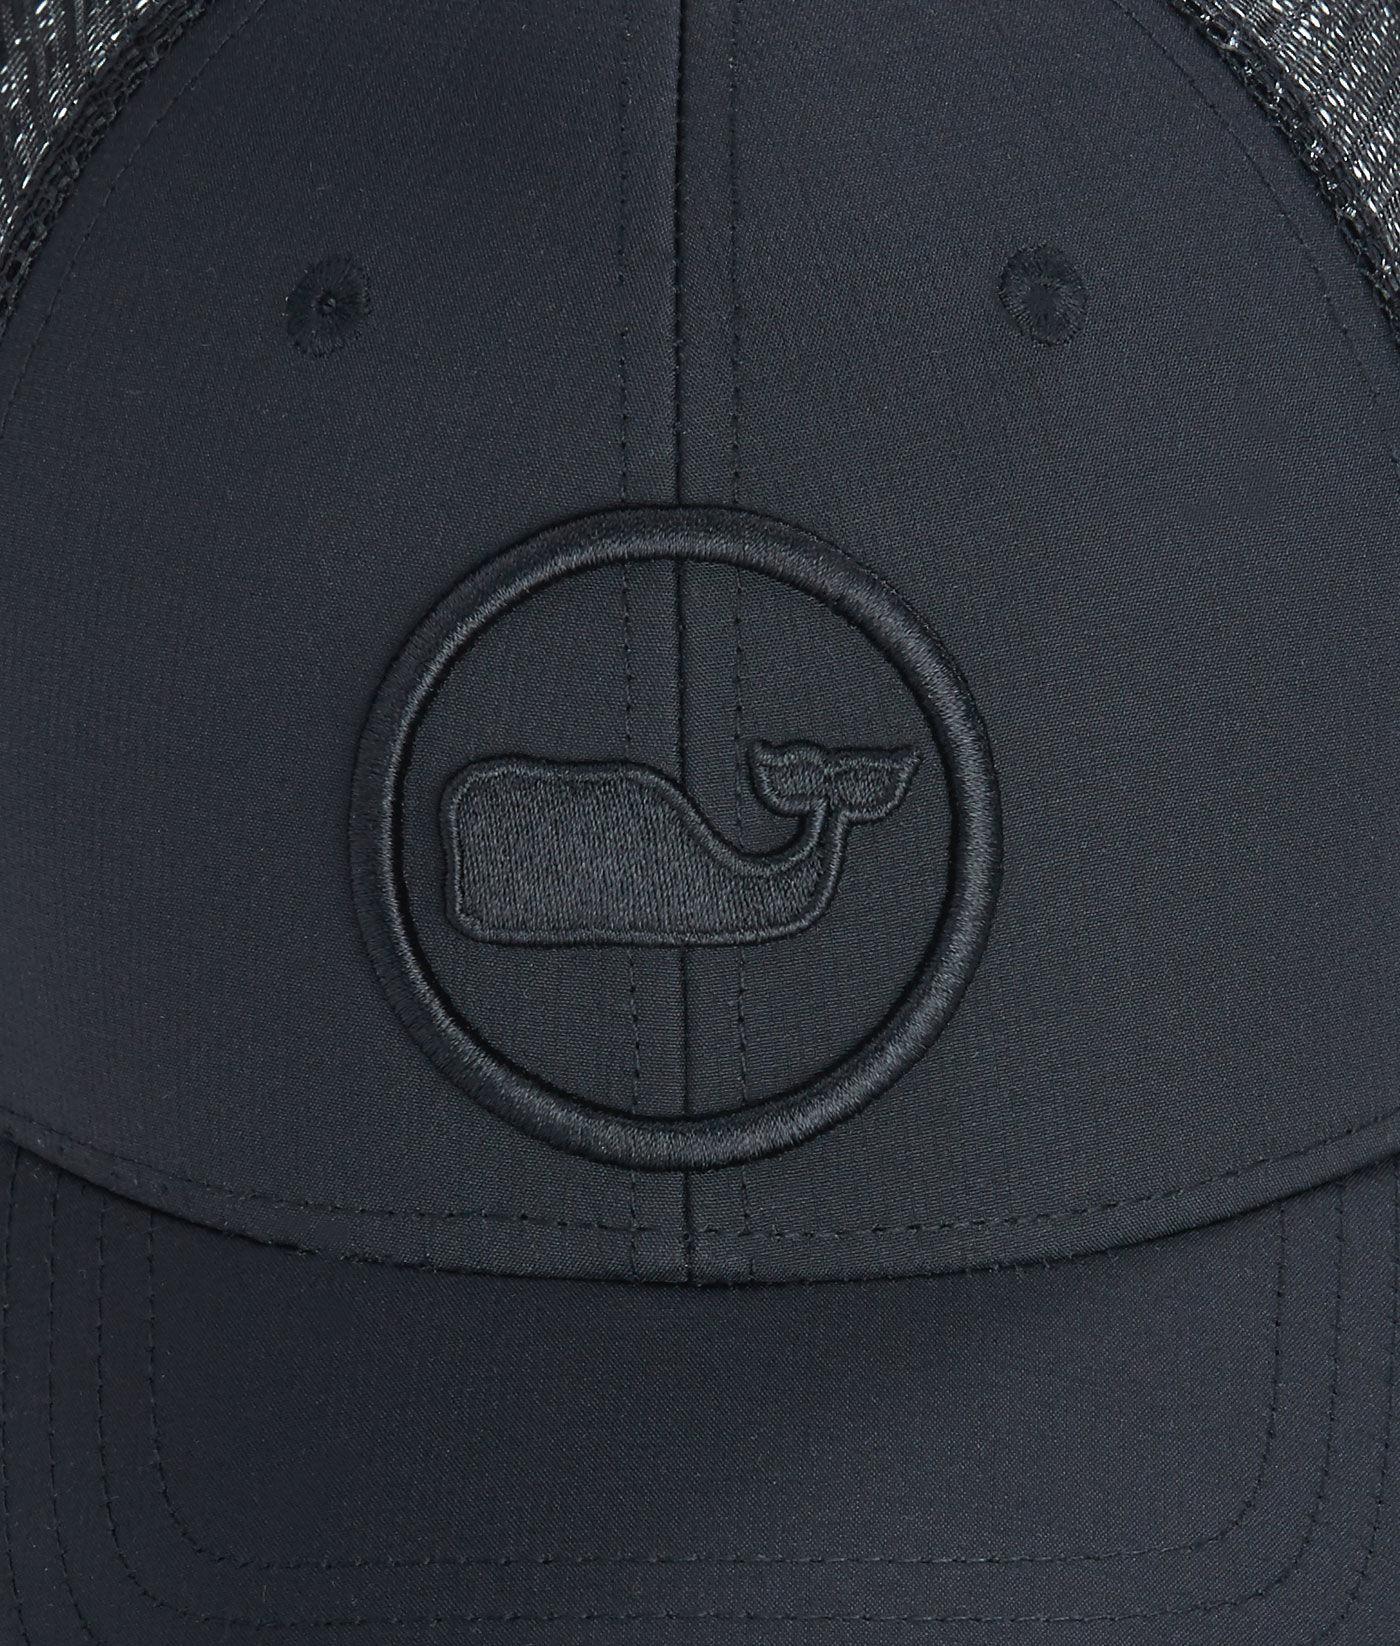 Black Whale Logo - Lyst Vines Whale Dot Performance Trucker Hat in Black